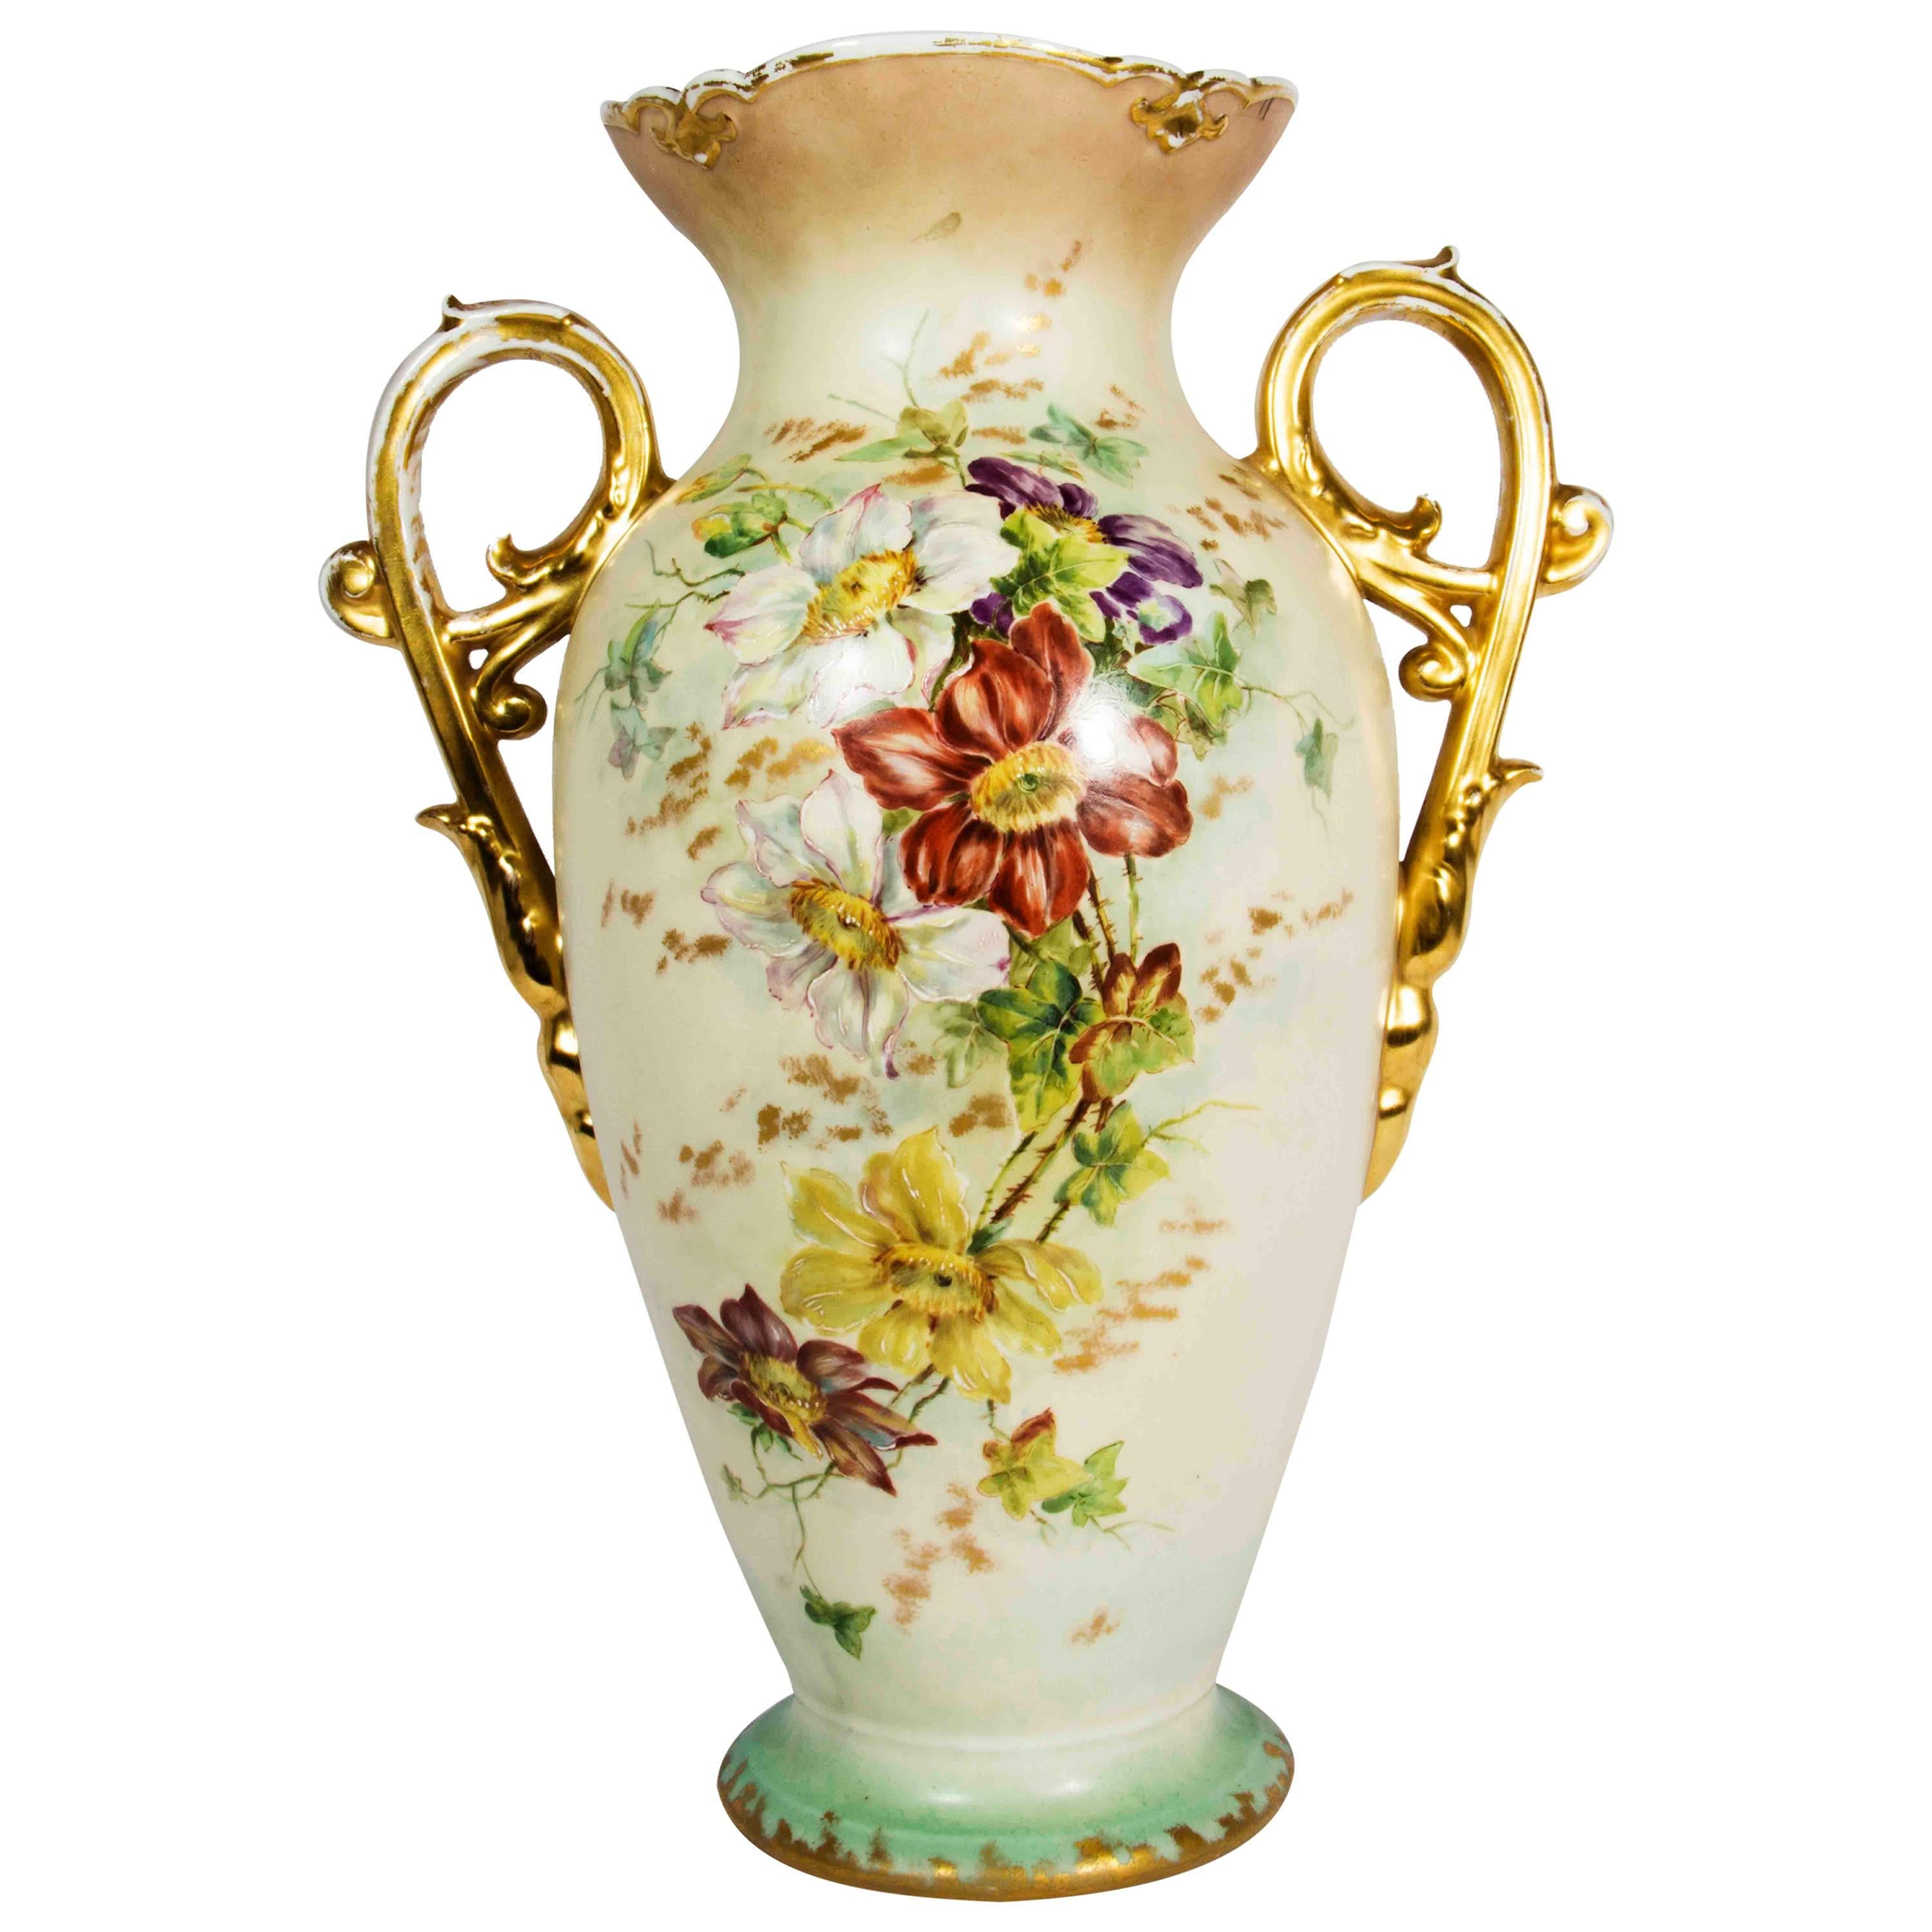 Antique French Porcelain Decorative Vase / Piece with Handle